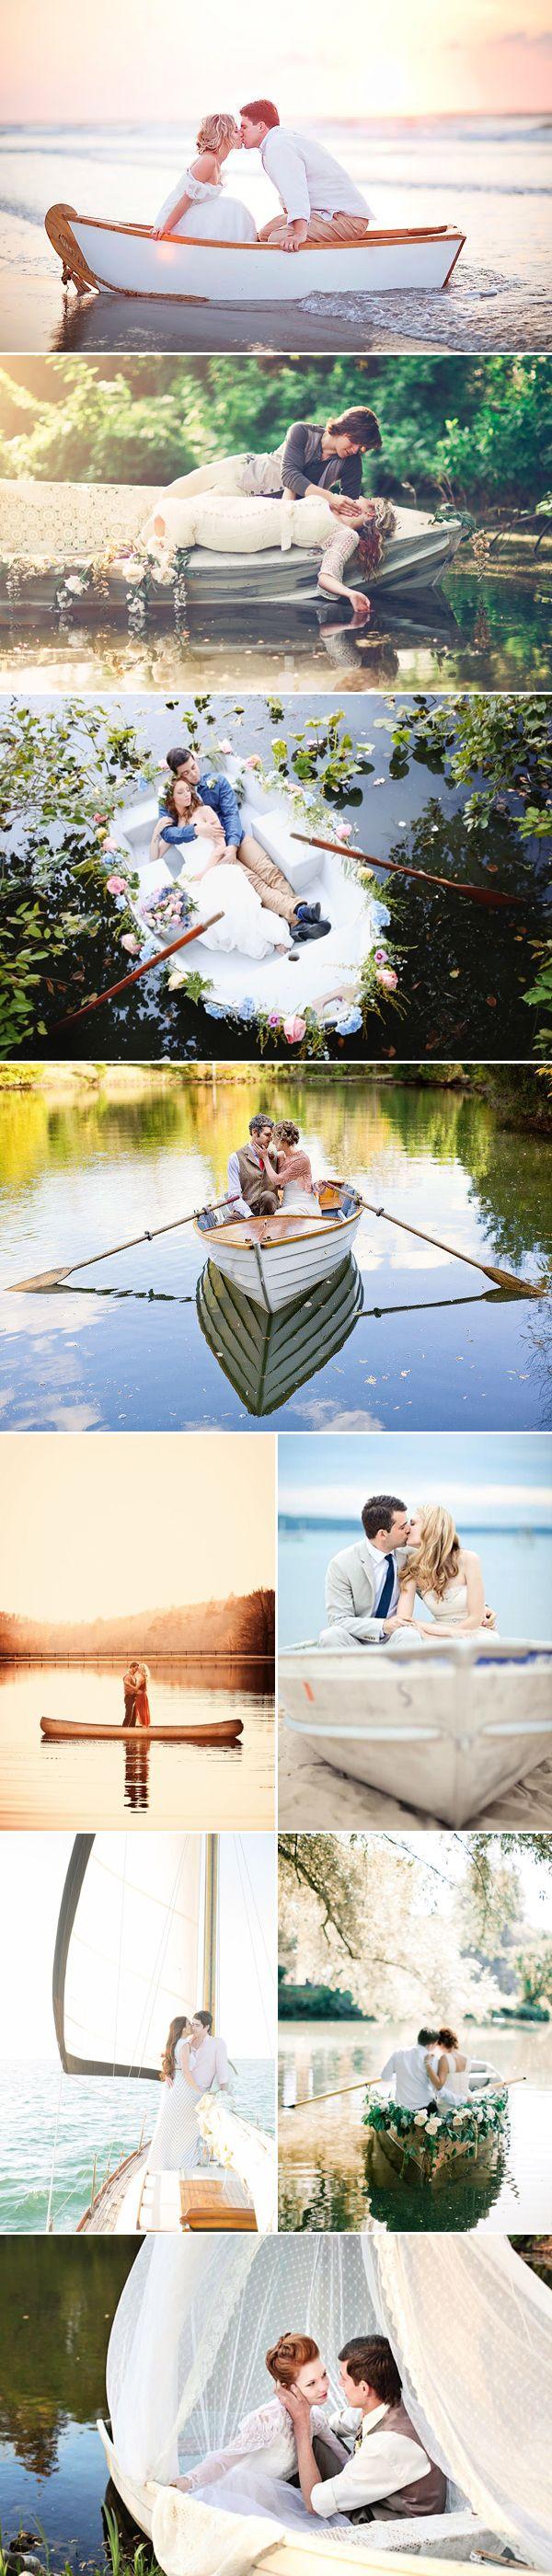 زفاف - Romantic Love-Boat Engagement Photo Ideas